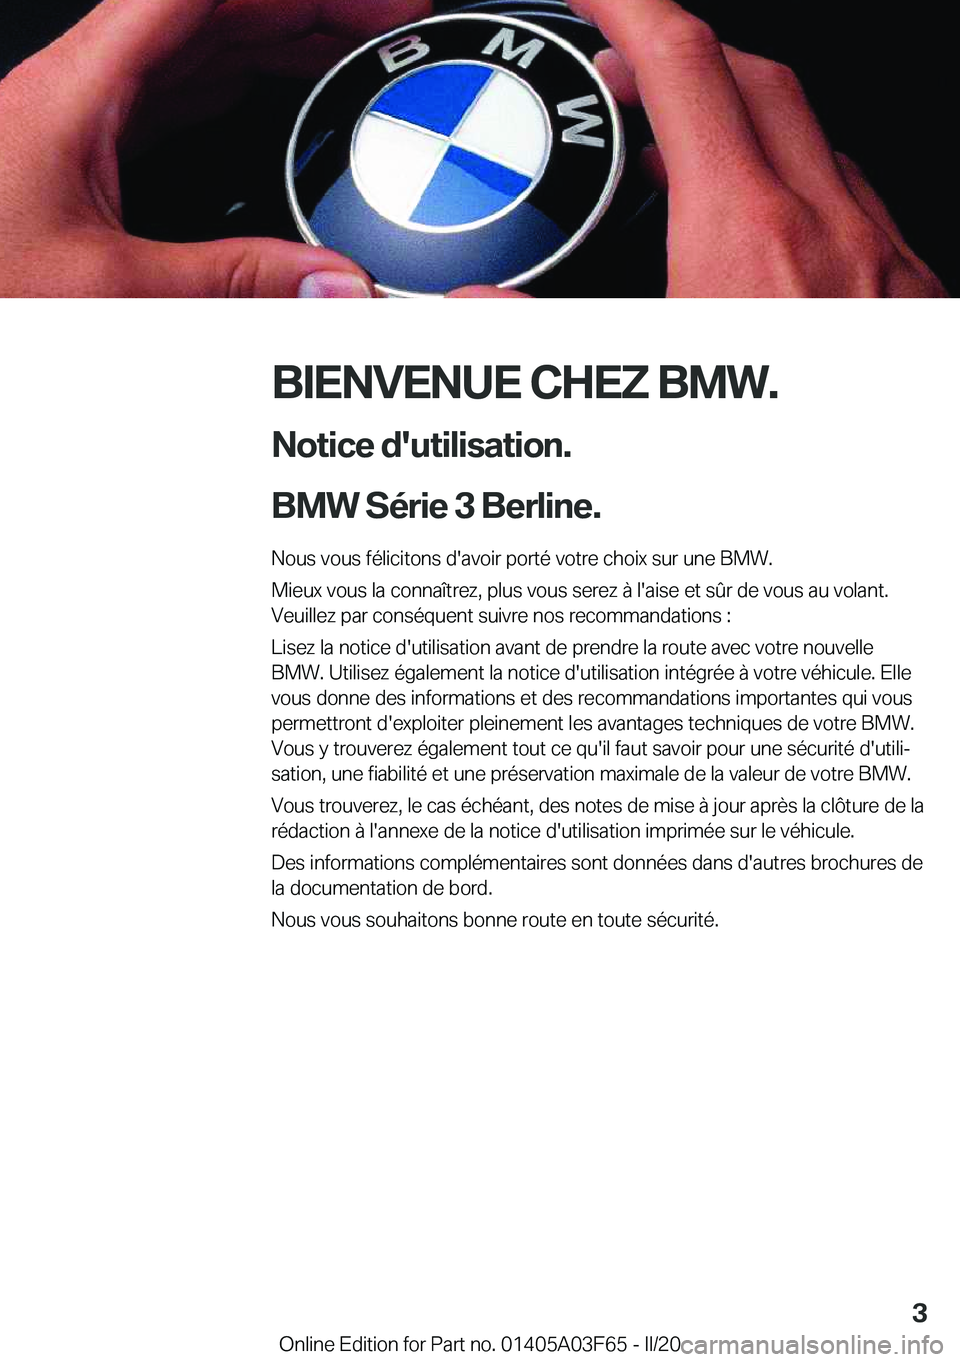 BMW 3 SERIES 2020  Notices Demploi (in French) �B�I�E�N�V�E�N�U�E��C�H�E�Z��B�M�W�.�N�o�t�i�c�e��d�'�u�t�i�l�i�s�a�t�i�o�n�.
�B�M�W��S�é�r�i�e��3��B�e�r�l�i�n�e�.
�N�o�u�s��v�o�u�s��f�é�l�i�c�i�t�o�n�s��d�'�a�v�o�i�r��p�o�r�t��